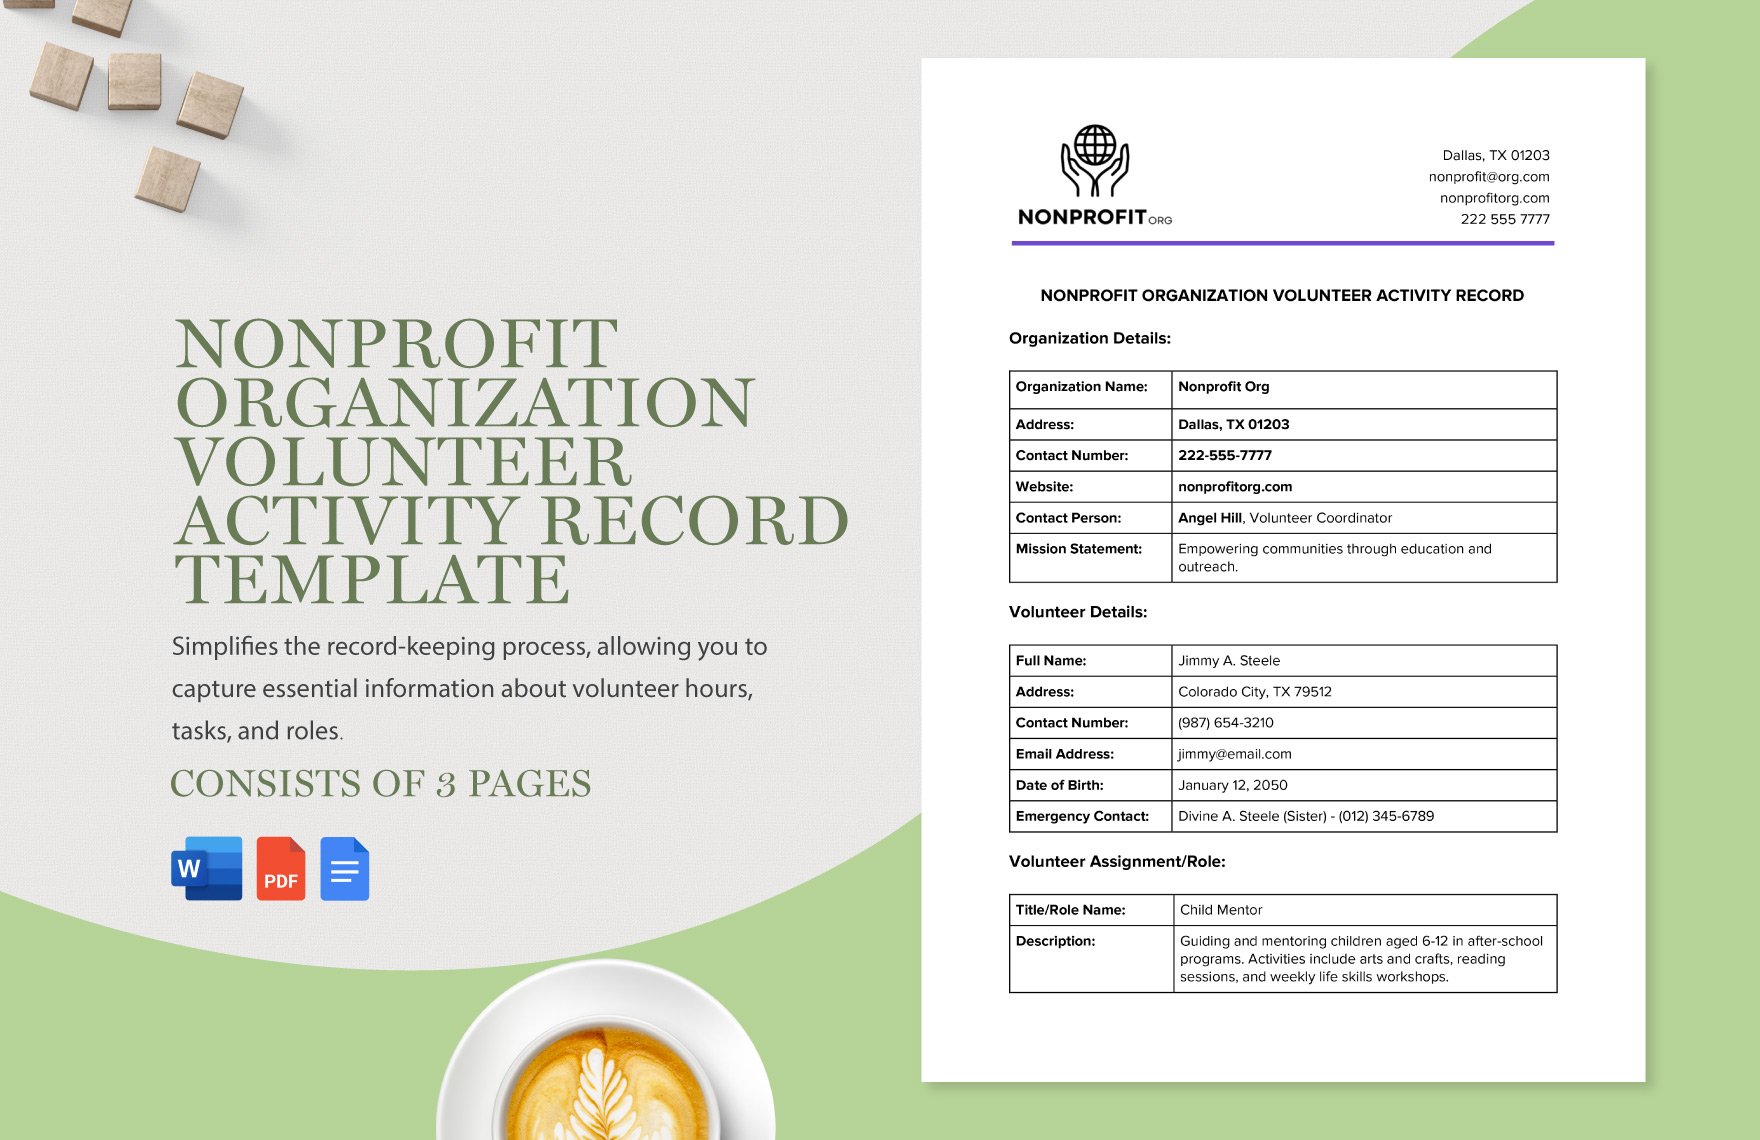 Nonprofit Organization Volunteer Activity Record Template in Word, Google Docs, PDF